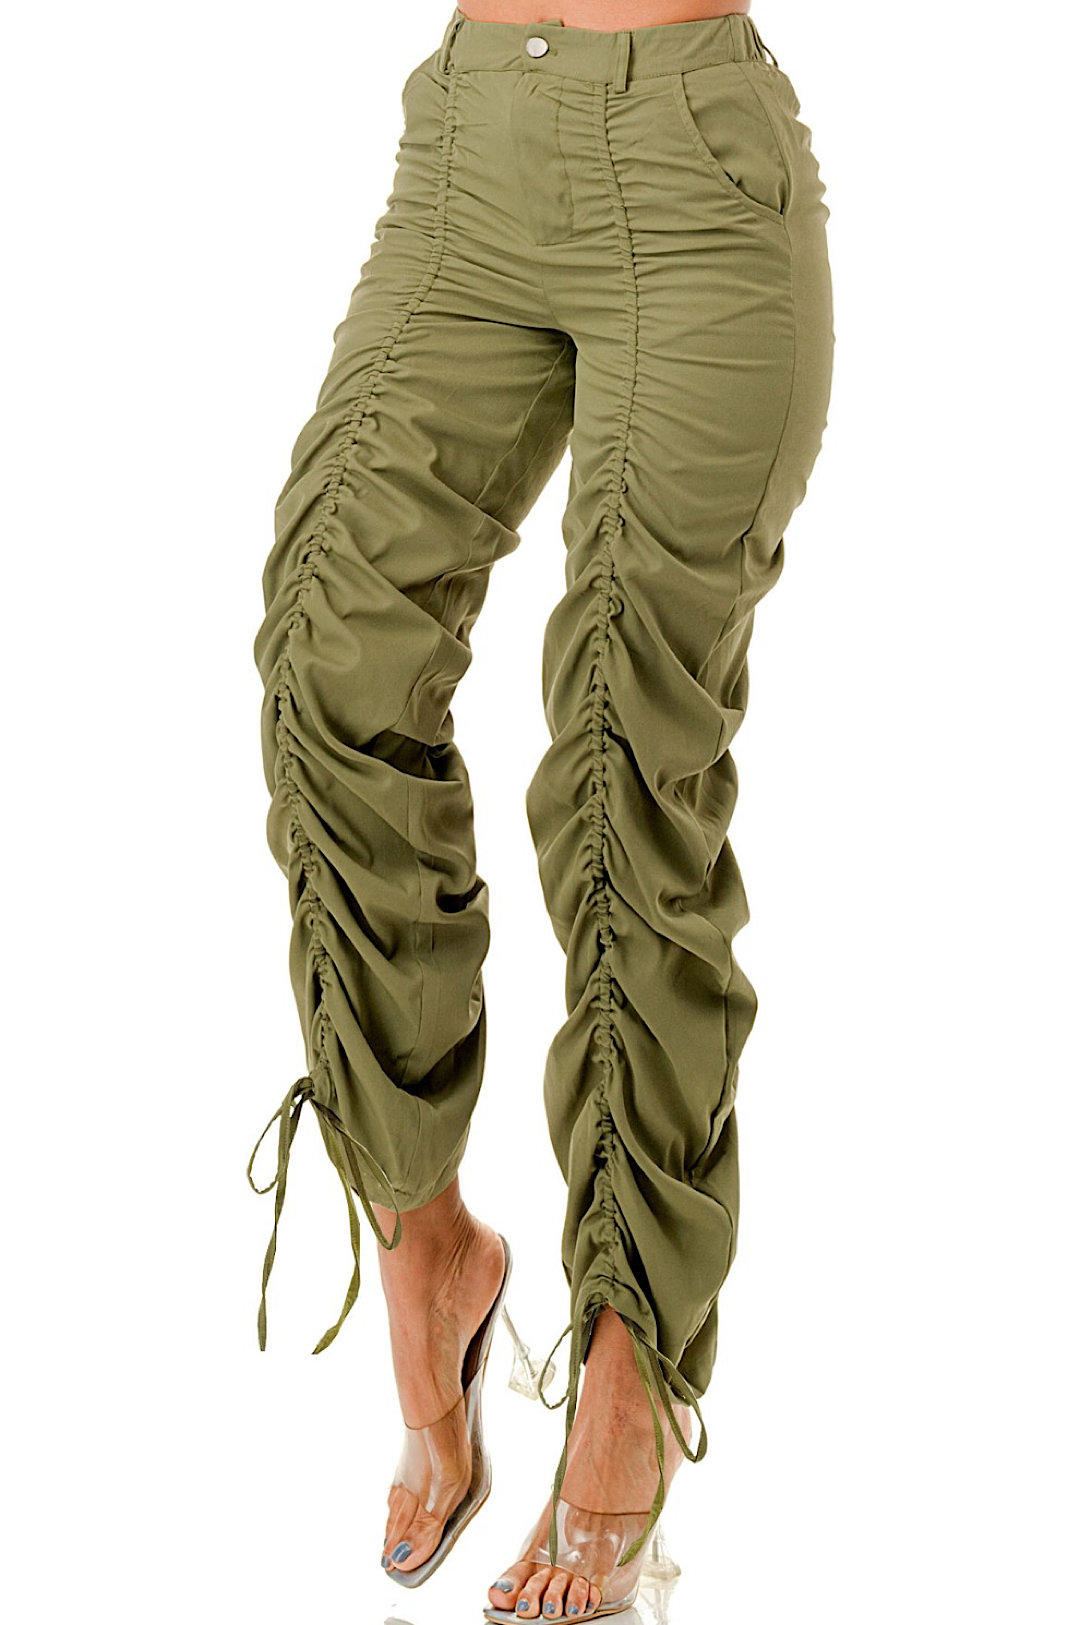 Black or Olive Green Drawstring Pants